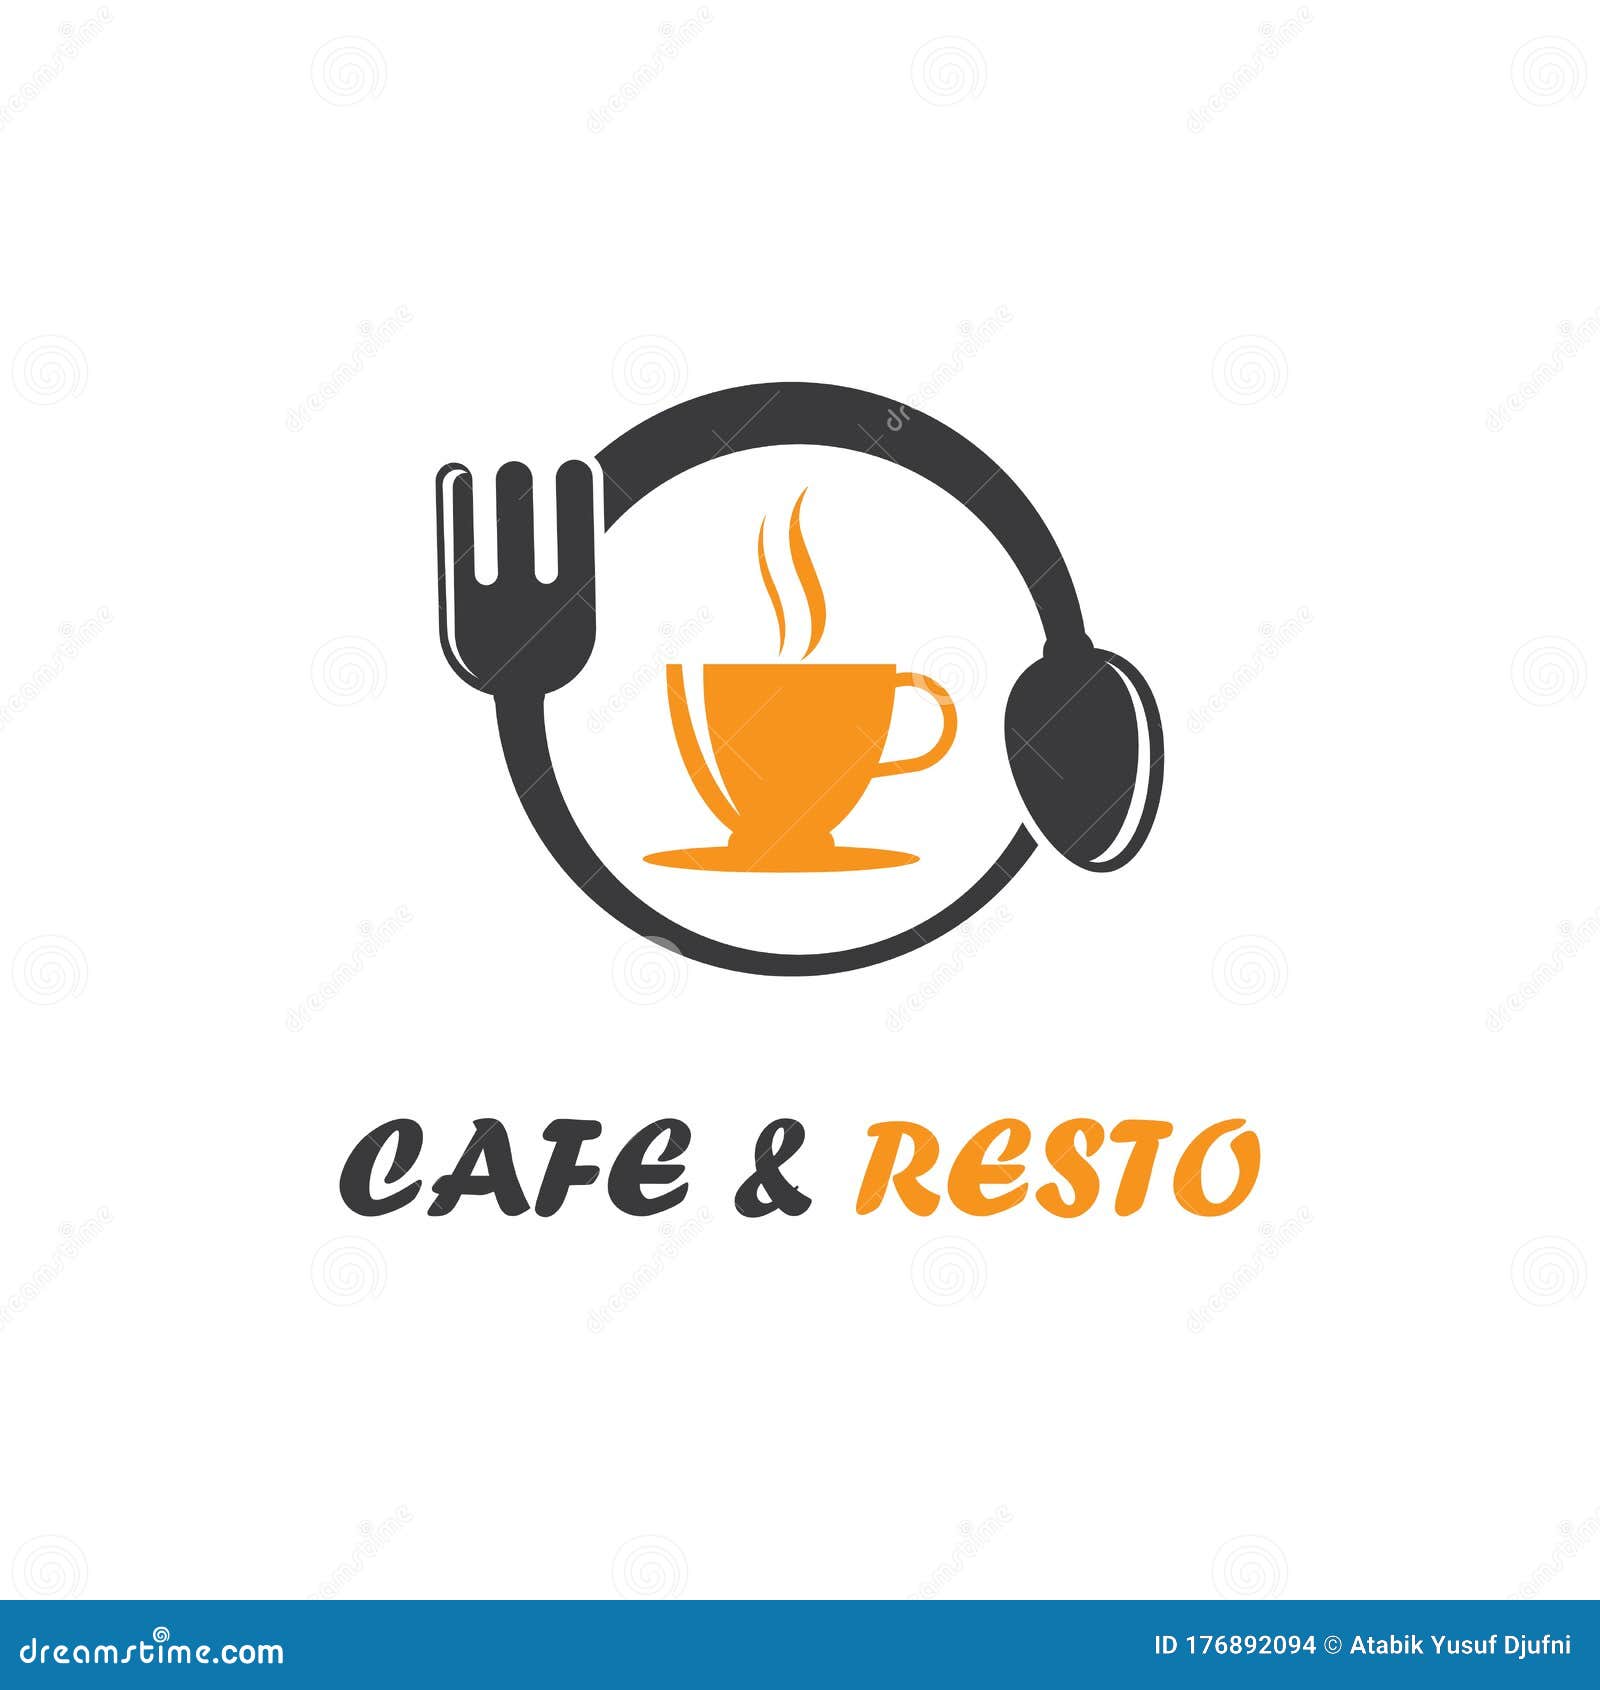 cafe & resto logo  icon